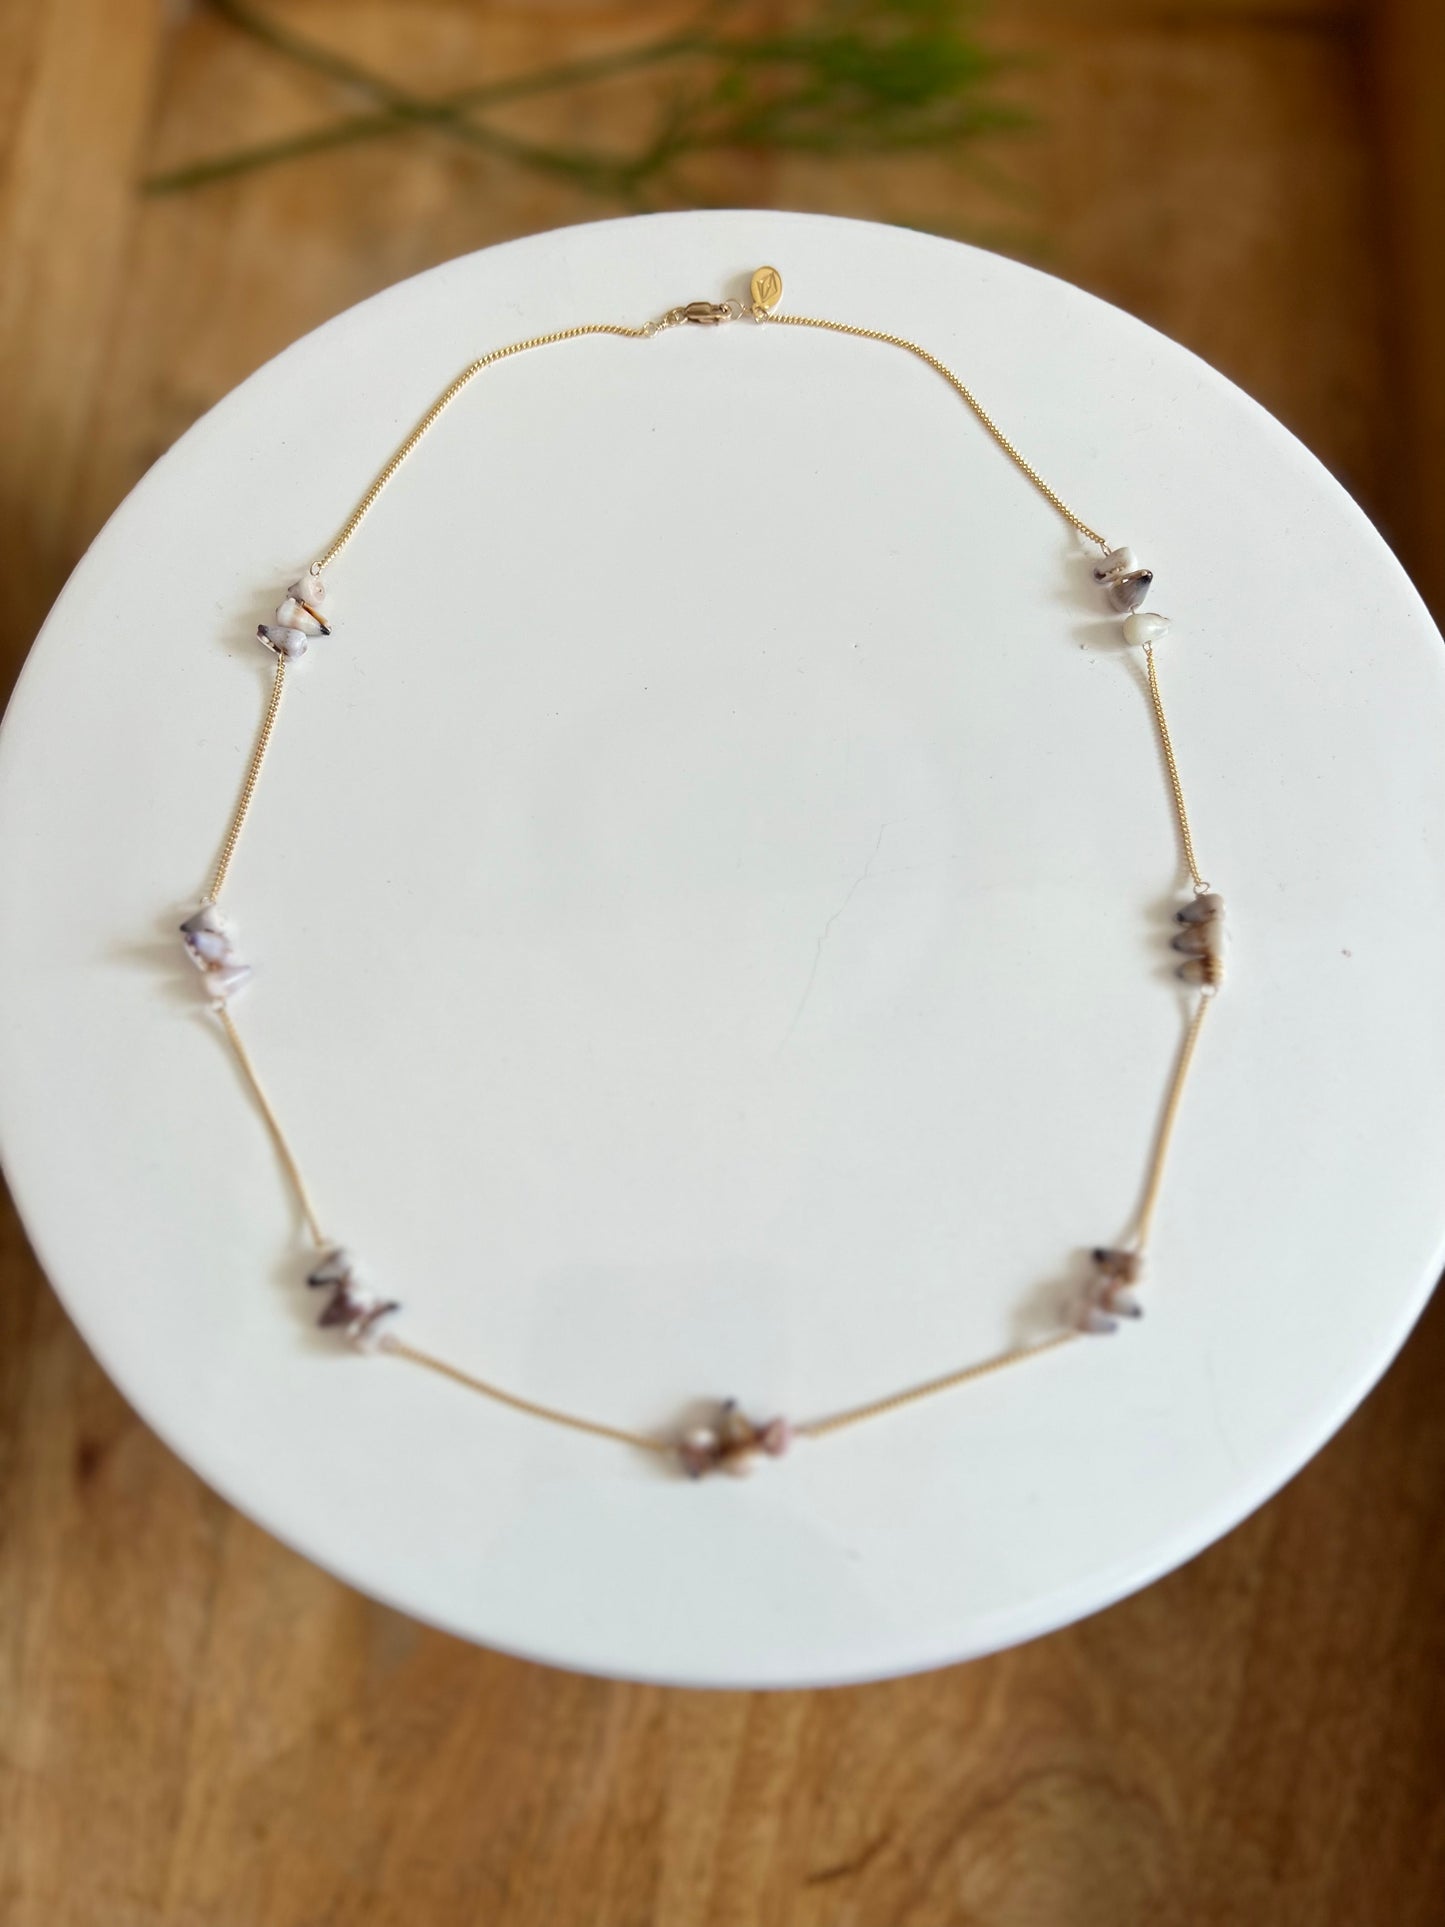 Dahlia necklace with mini cone shell